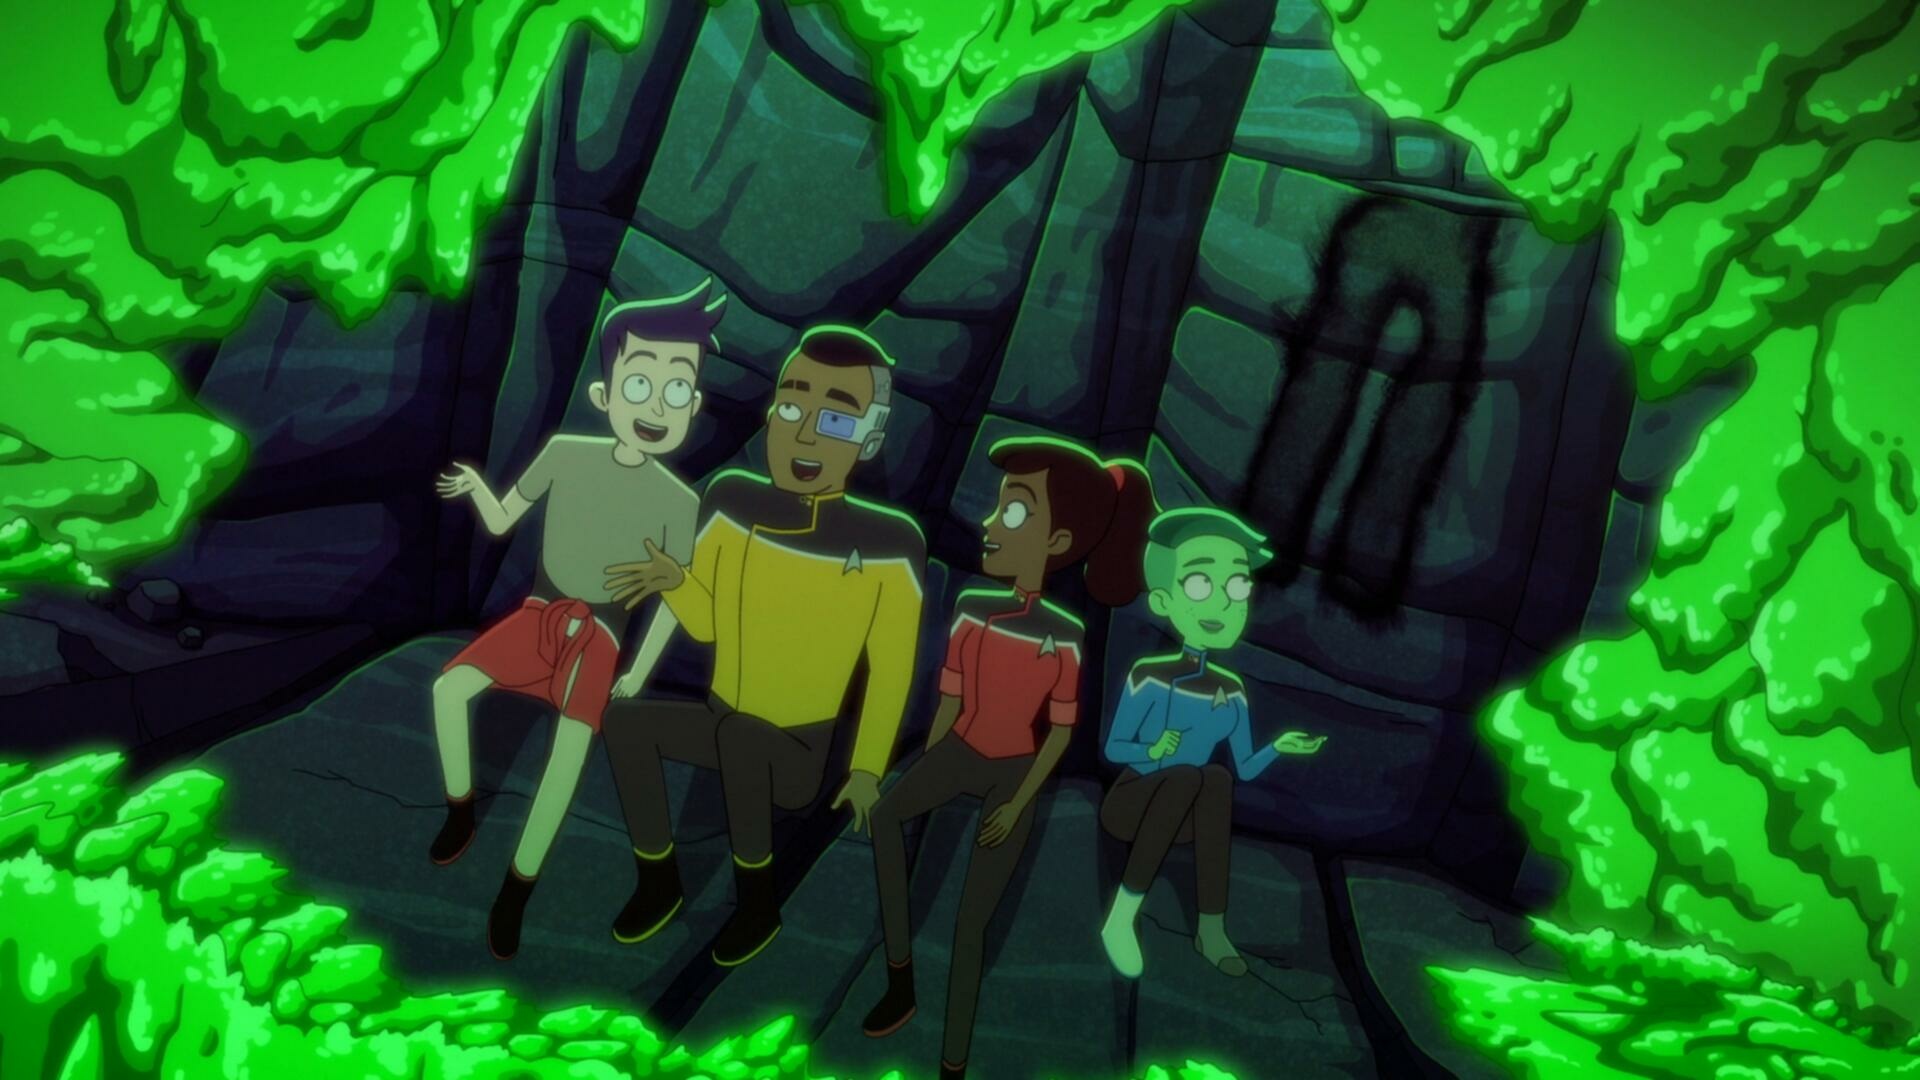 Star Trek Lower Decks S04E08 Caves 1080p AMZN WEB DL DDP5 1 H 264 NTb TGx